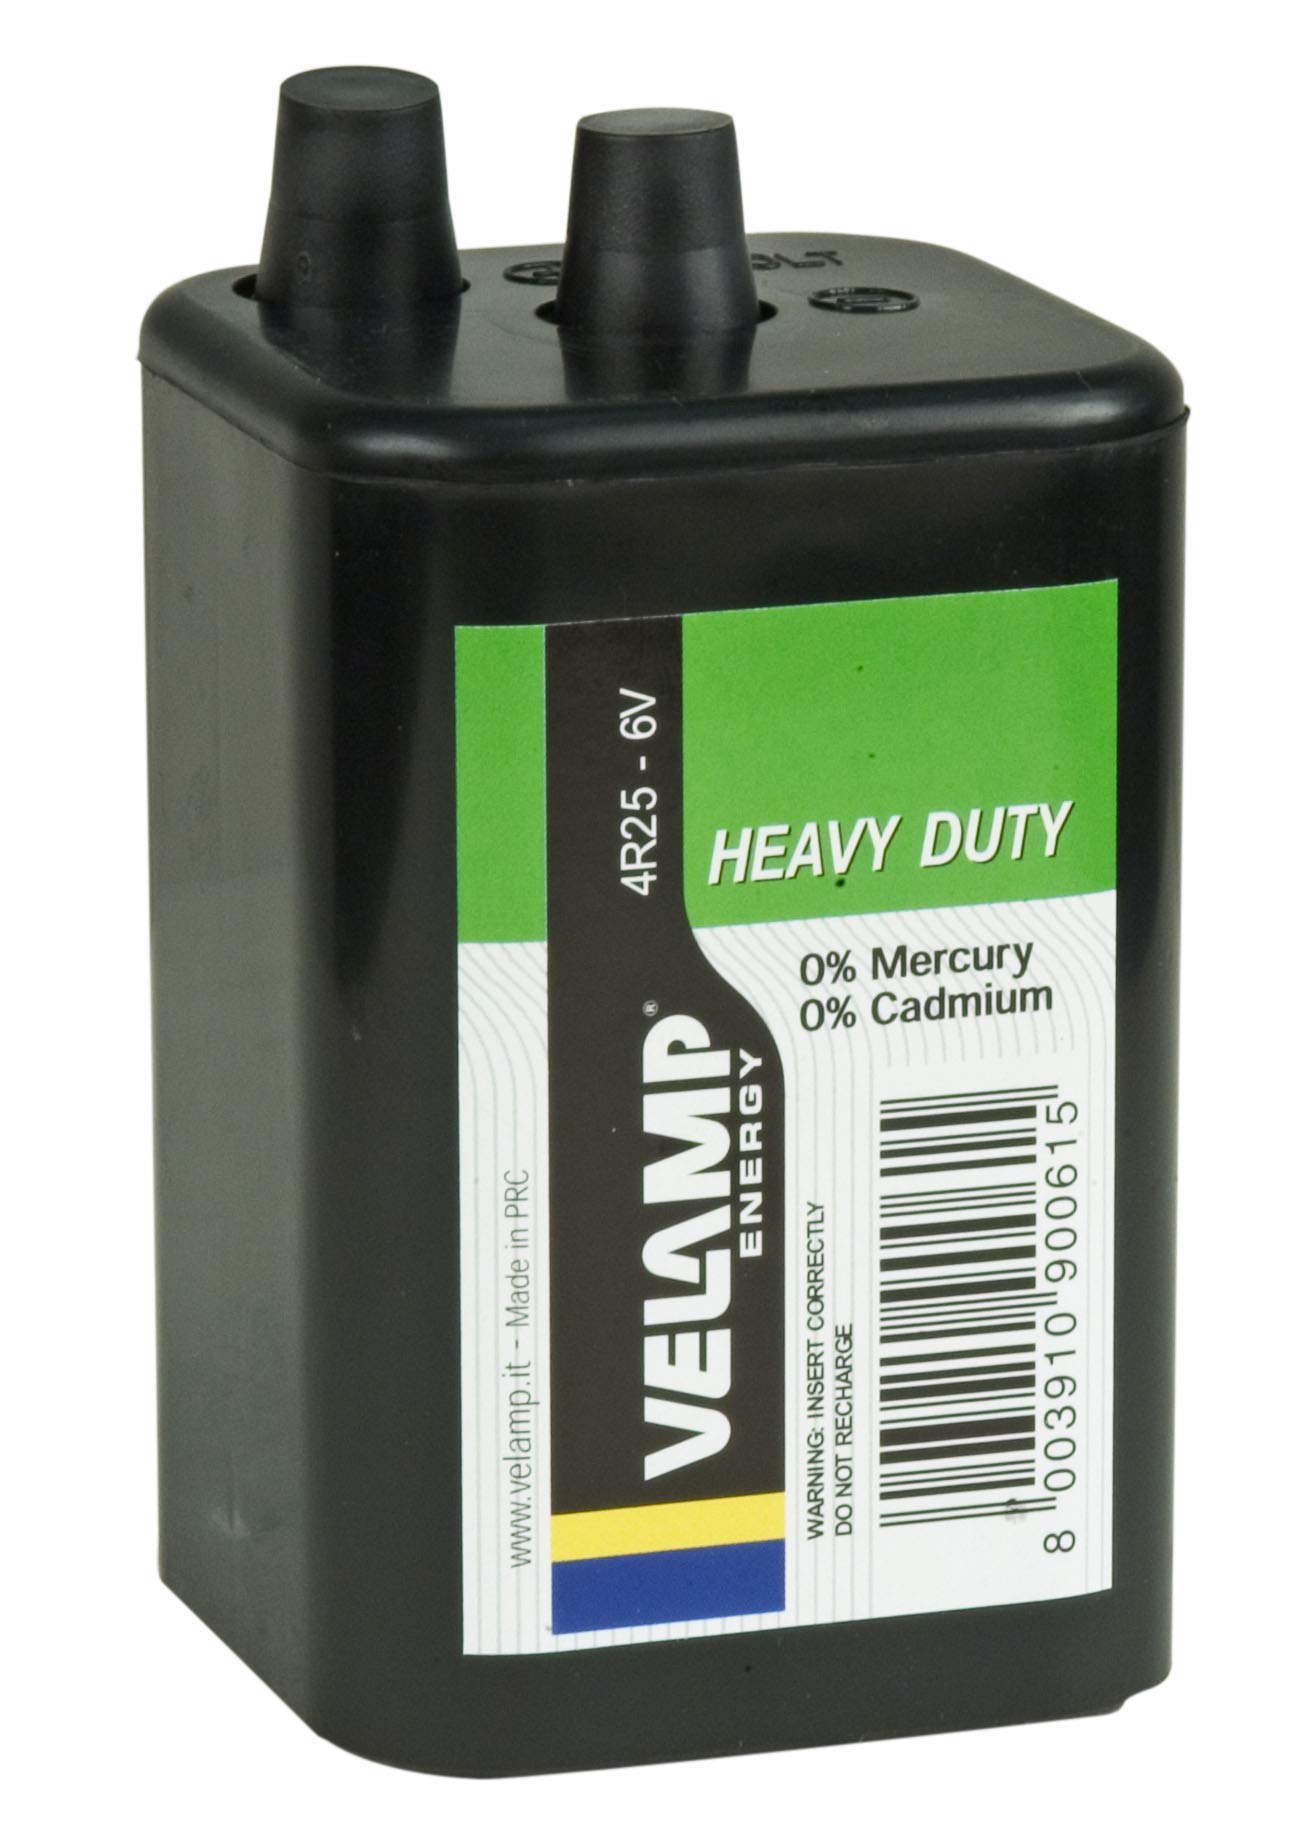 Batteria zinco carbone - per lampeggianti stradali - 6 V - Velamp